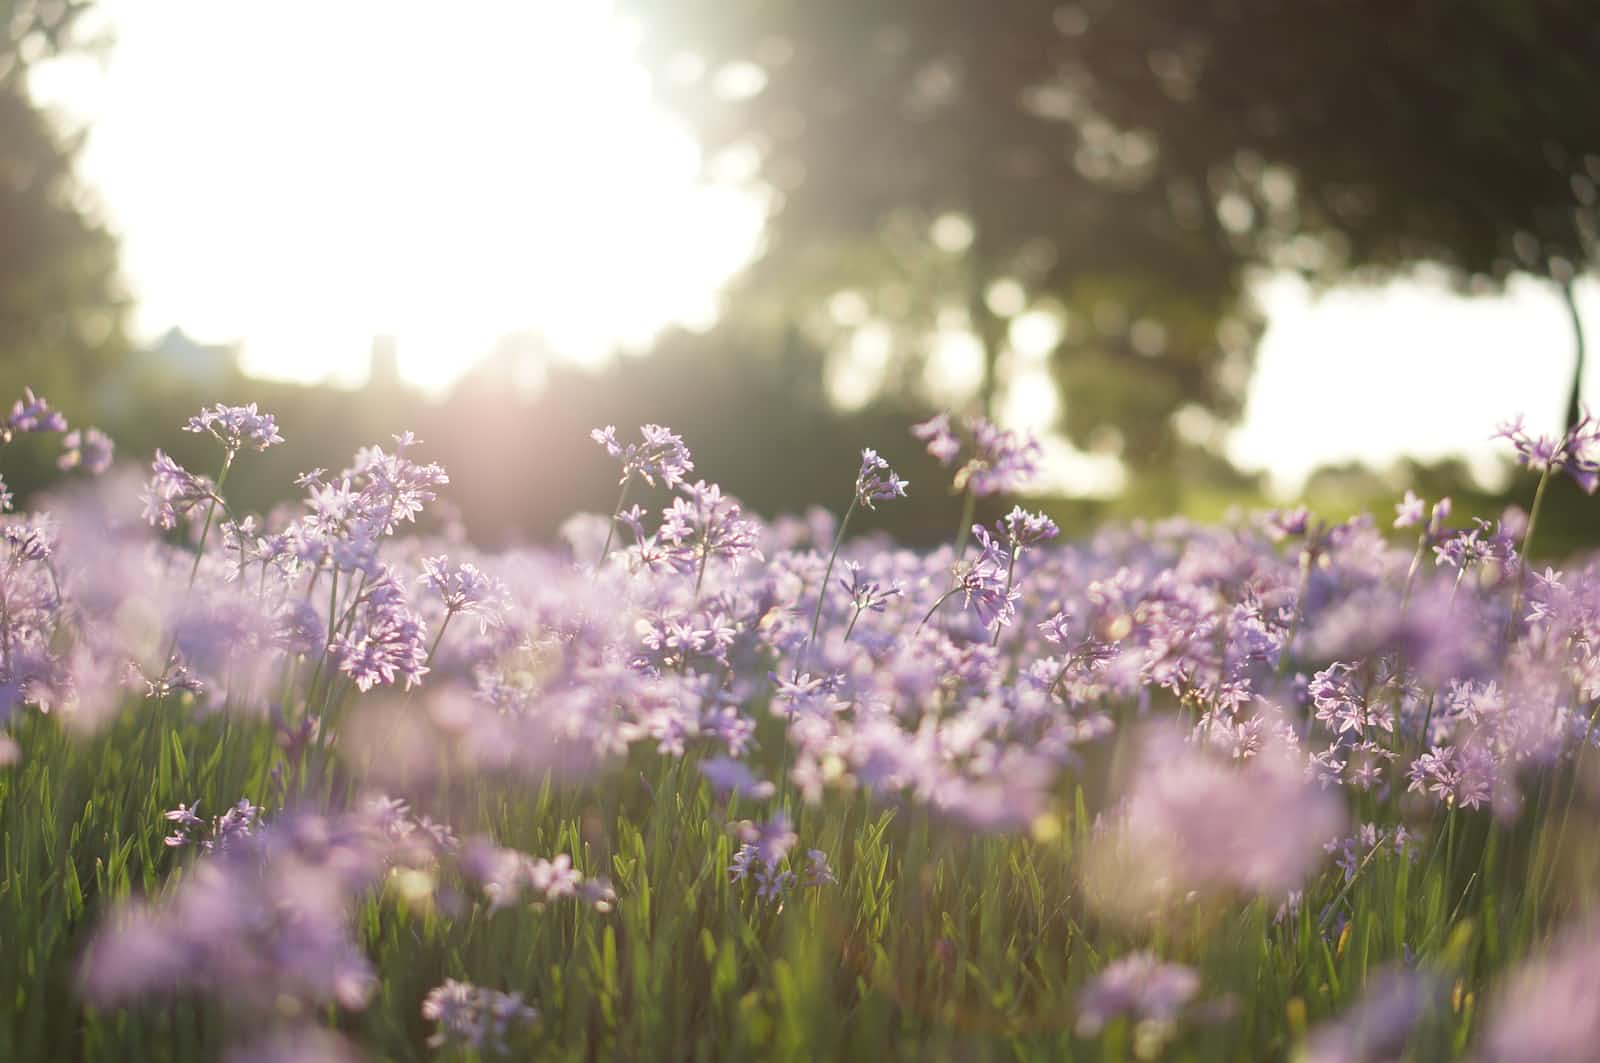 A field of lilacs